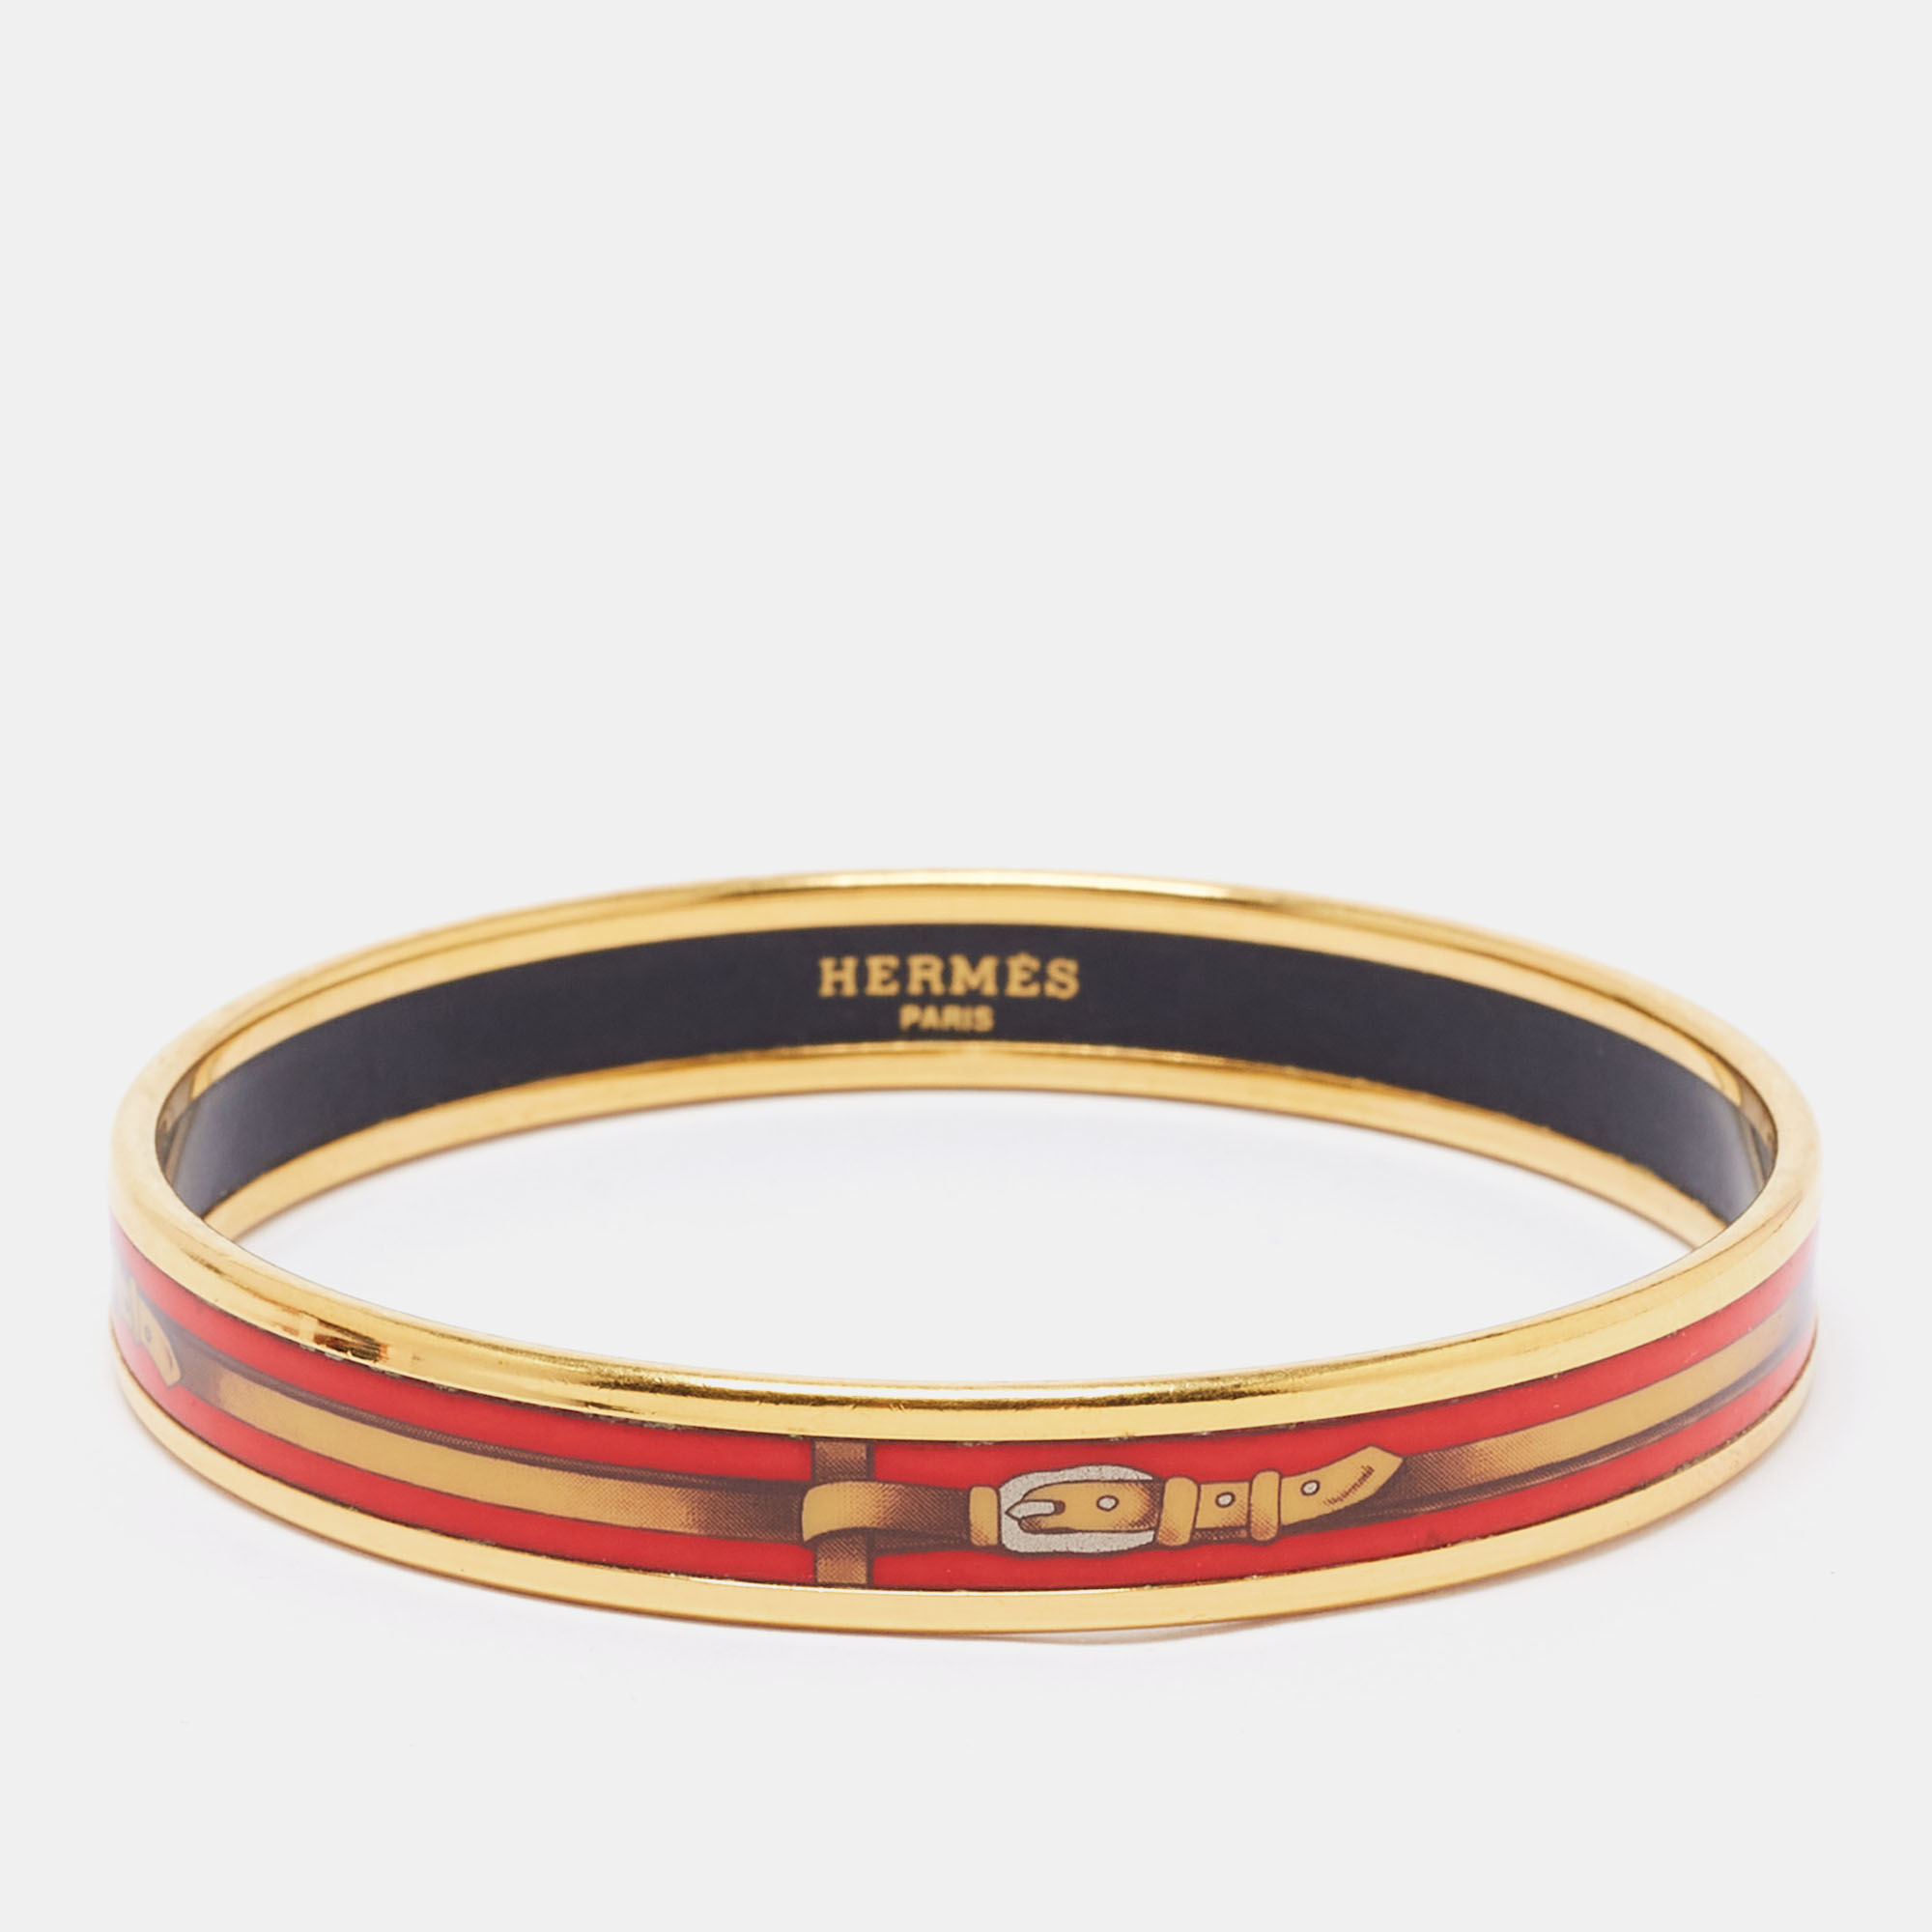 Hermes  Enamel Printed Gold Plated Narrow Bracelet